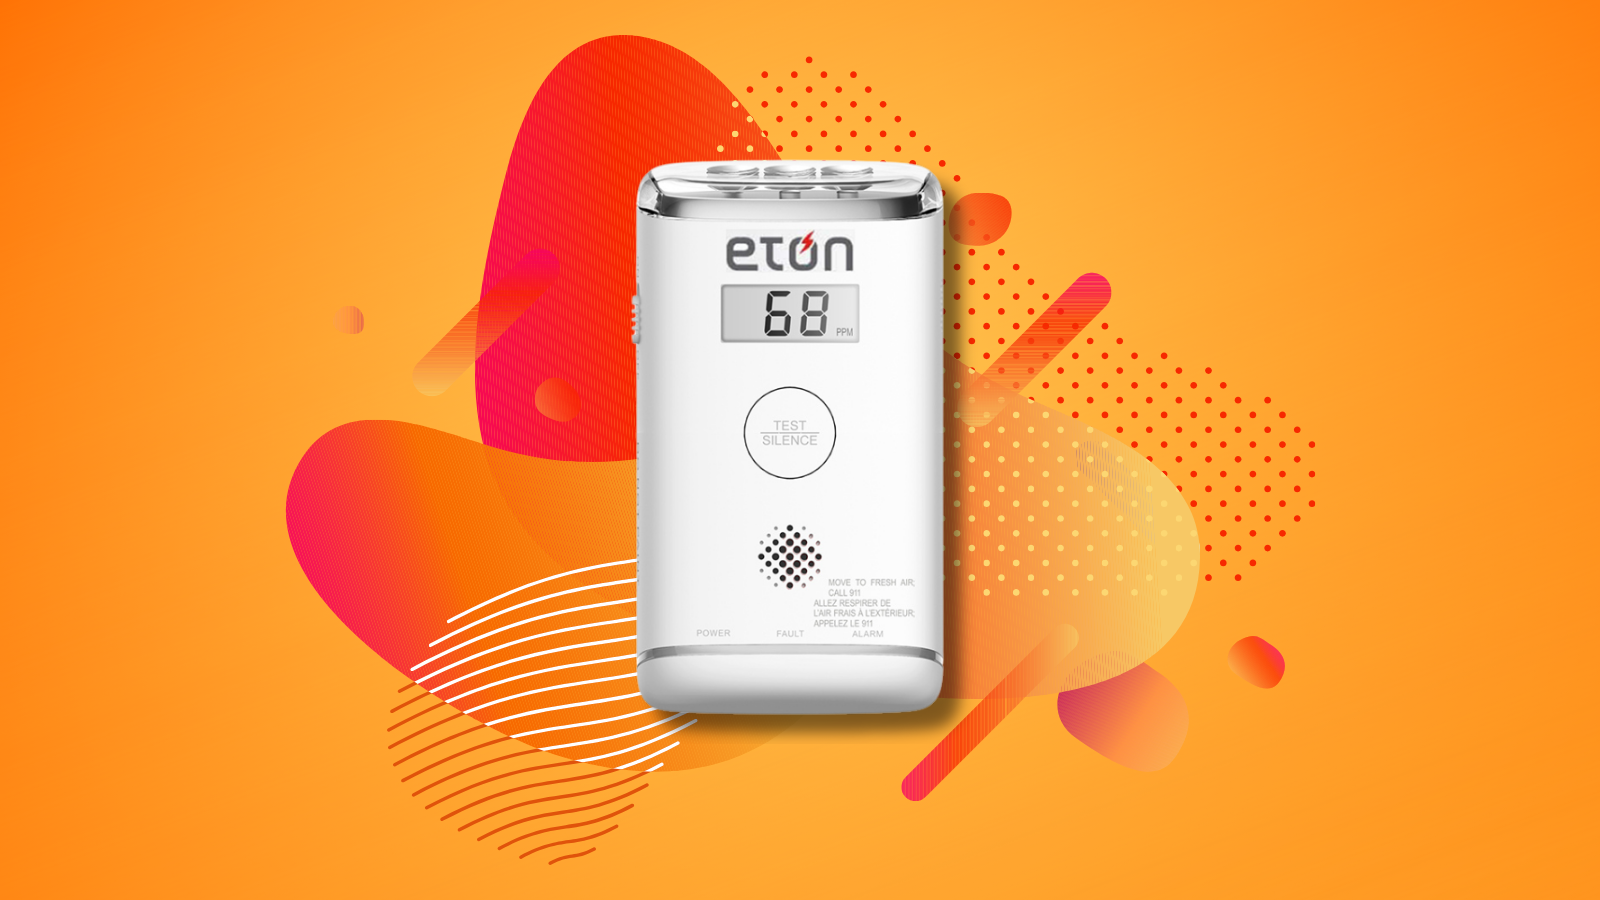 Eton carbon monoxide alarm with orange gradient background